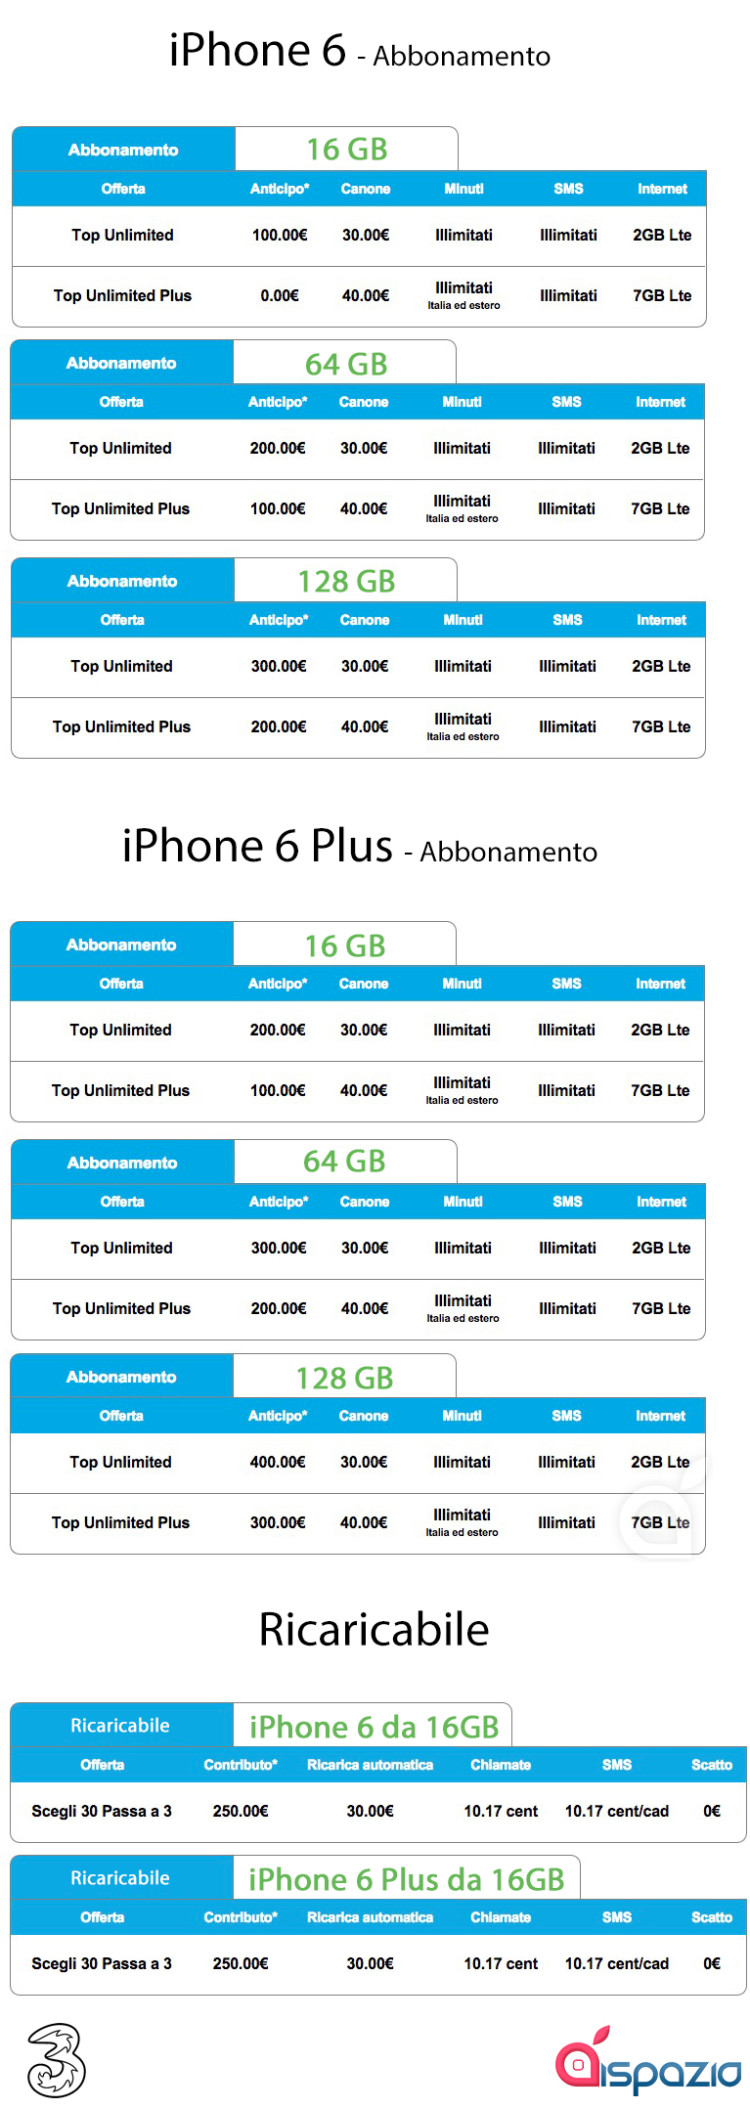 iphone-6-tariffe-abbonamento-3-italia